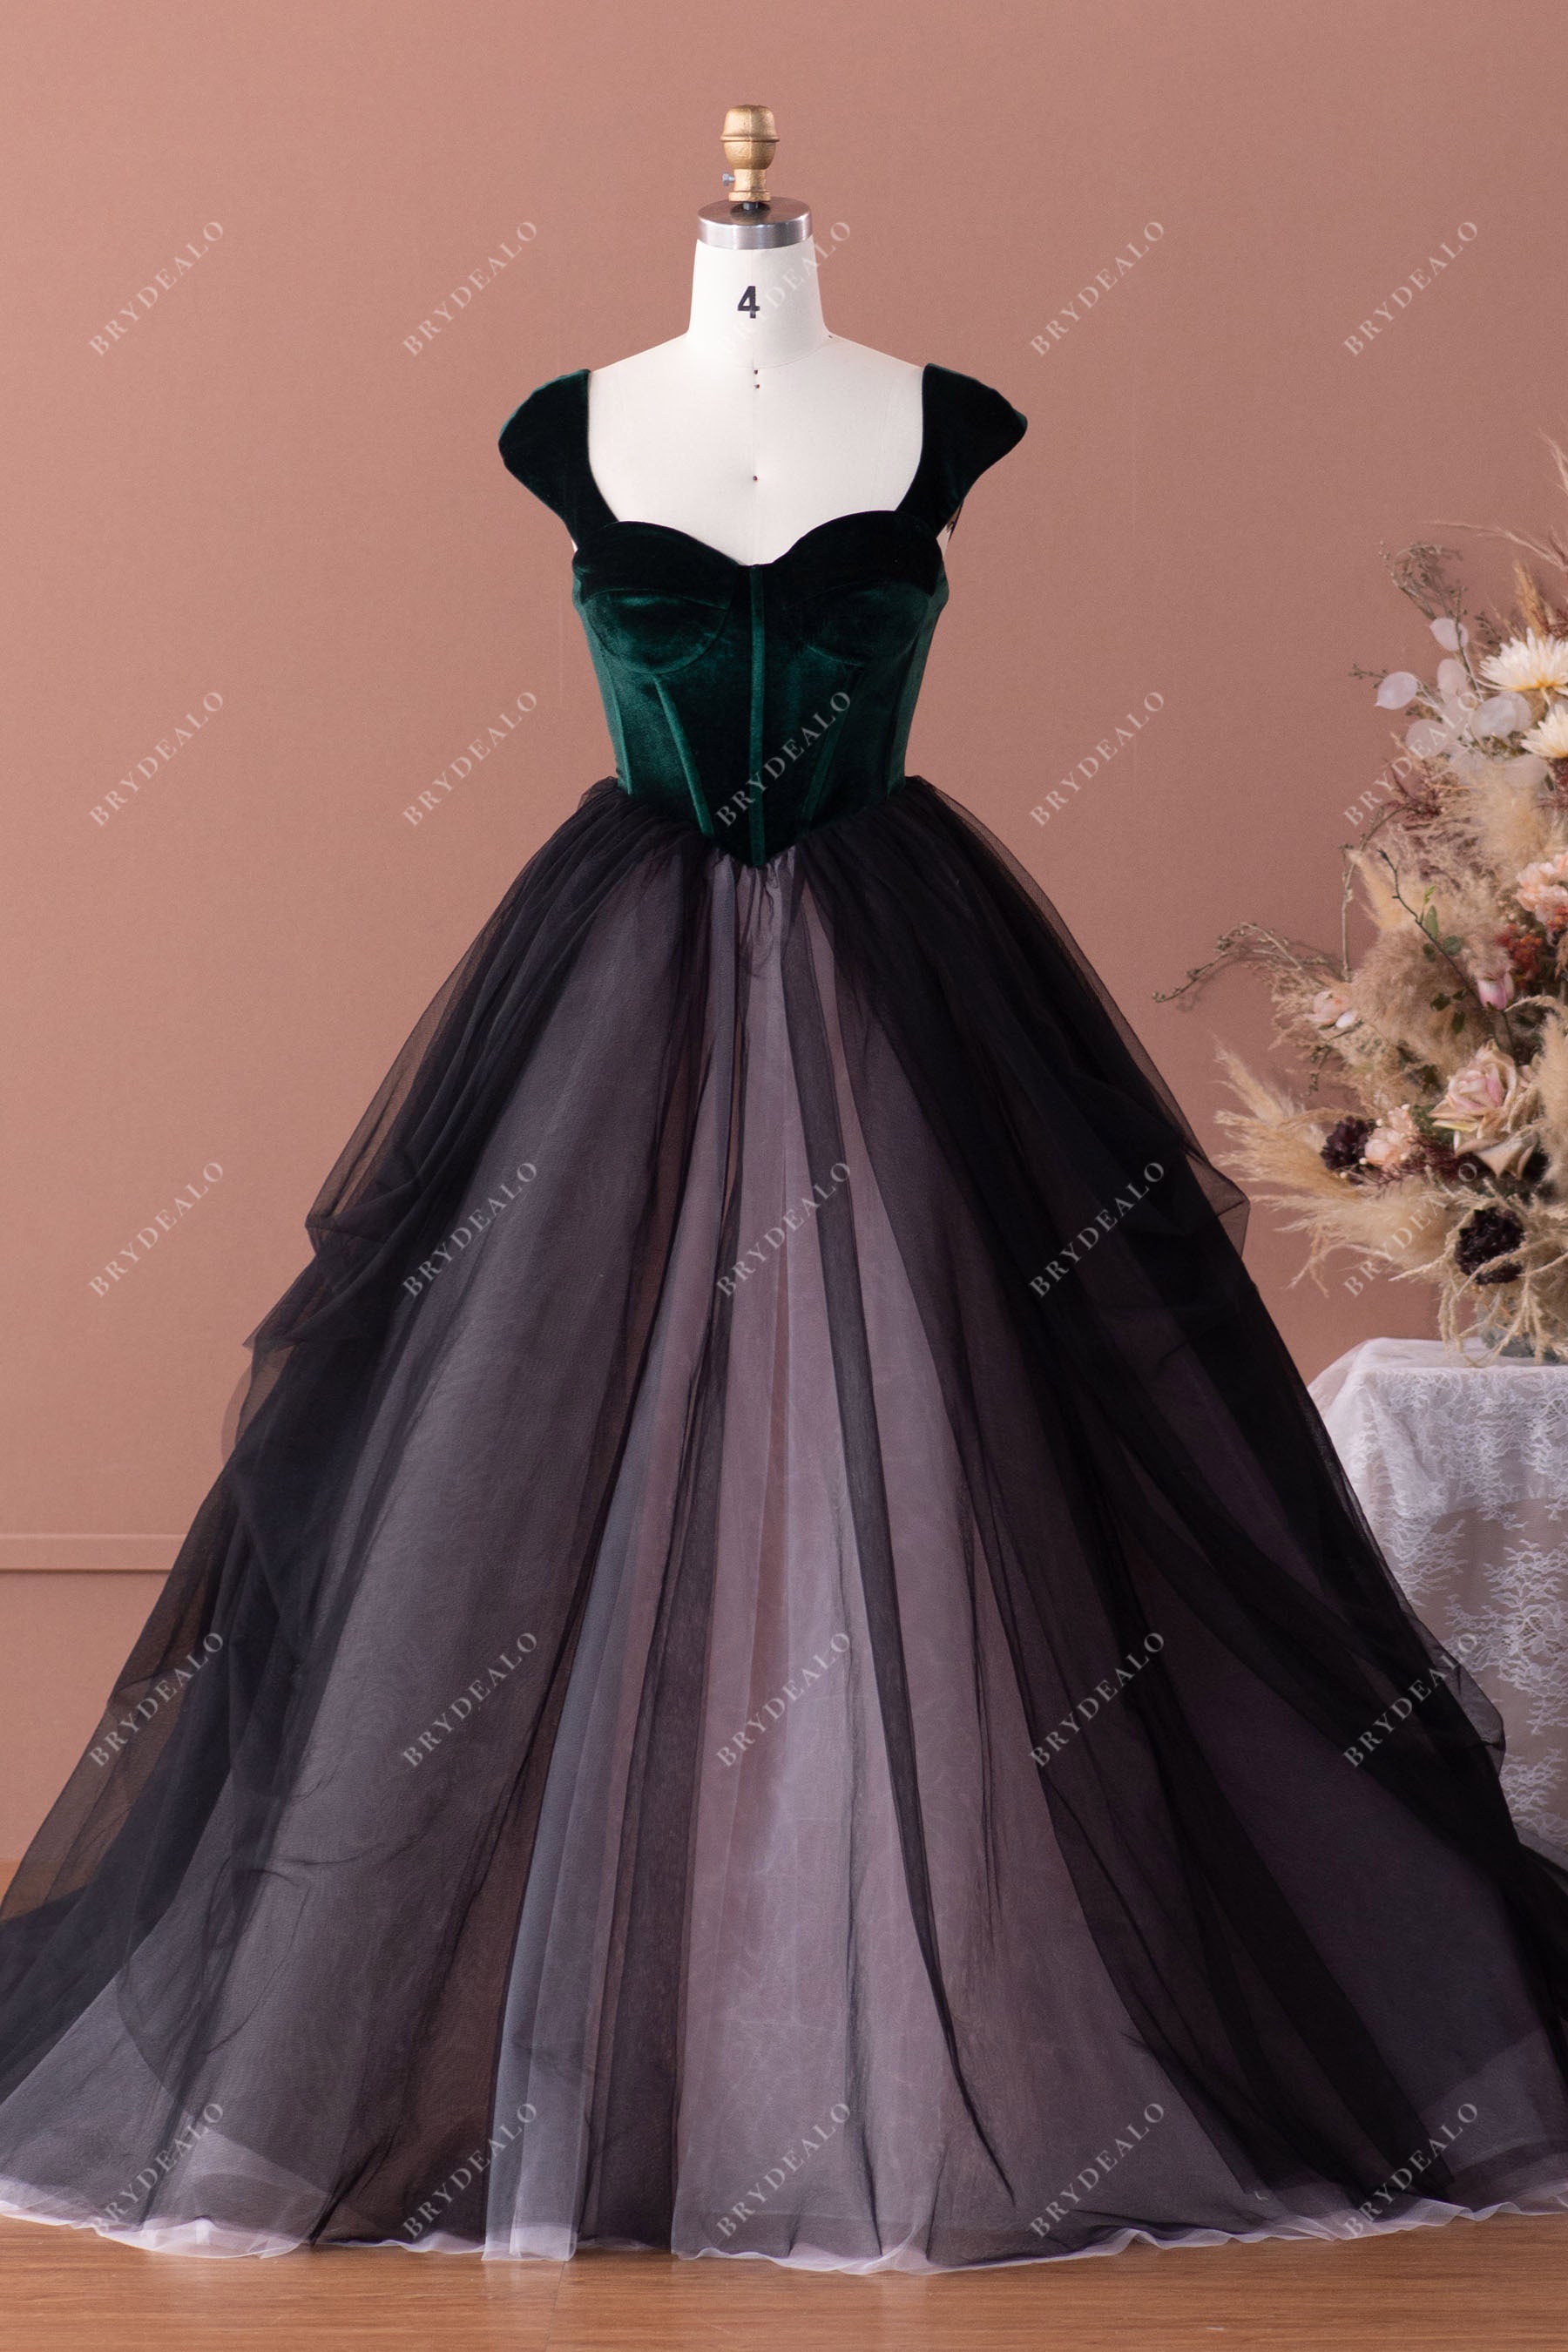 Victoria Velvet Tulle Colored Ballgown Retro Wedding Dress